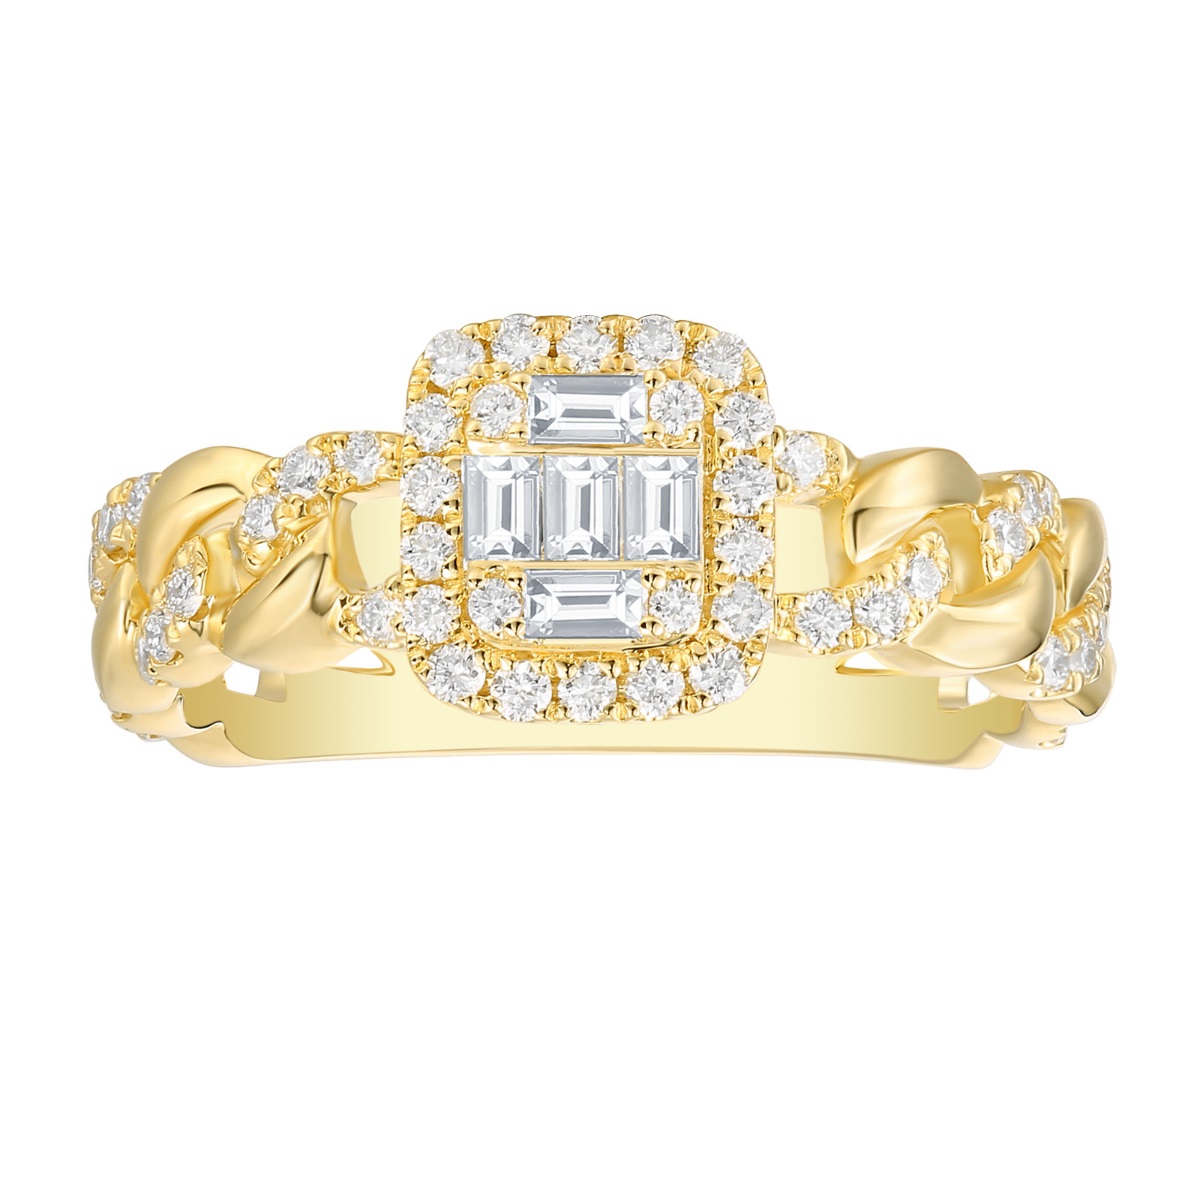 R36560WHT – 18K Yellow Gold  Diamond Ring, 0.55 TCW